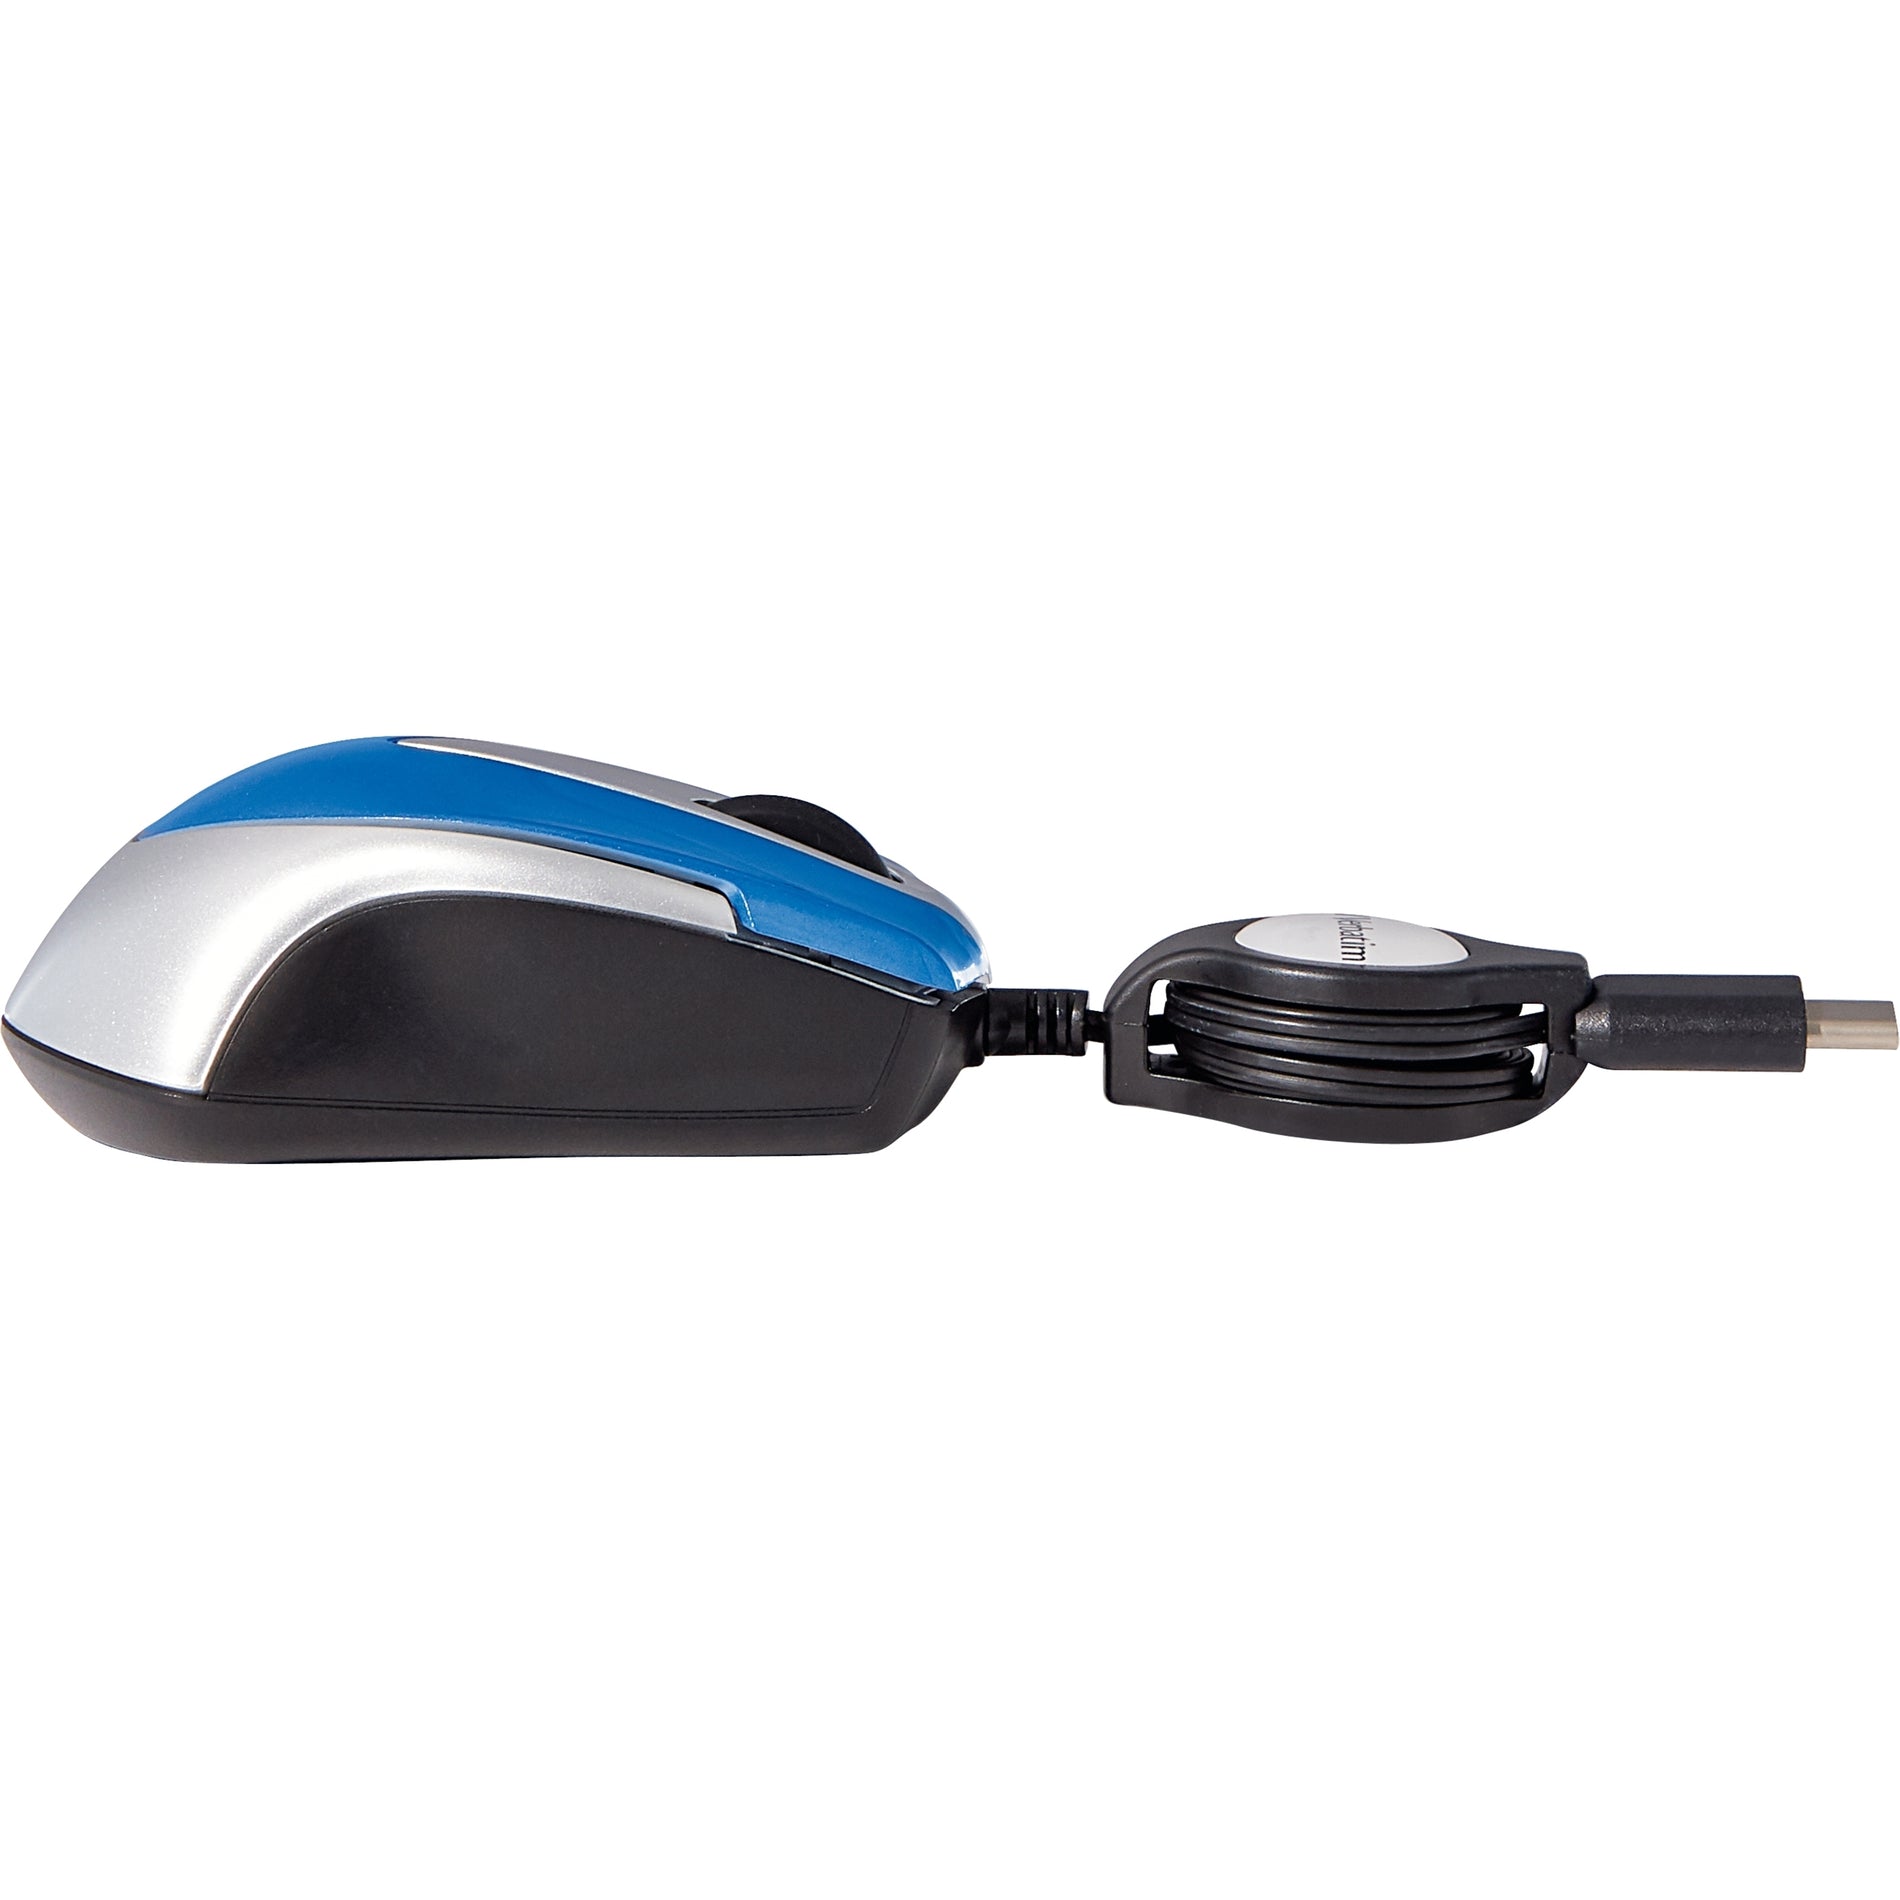 Verbatim 70237 USB-C Mini Optical Travel Mouse-Blue, 3 Buttons, Cable Connectivity